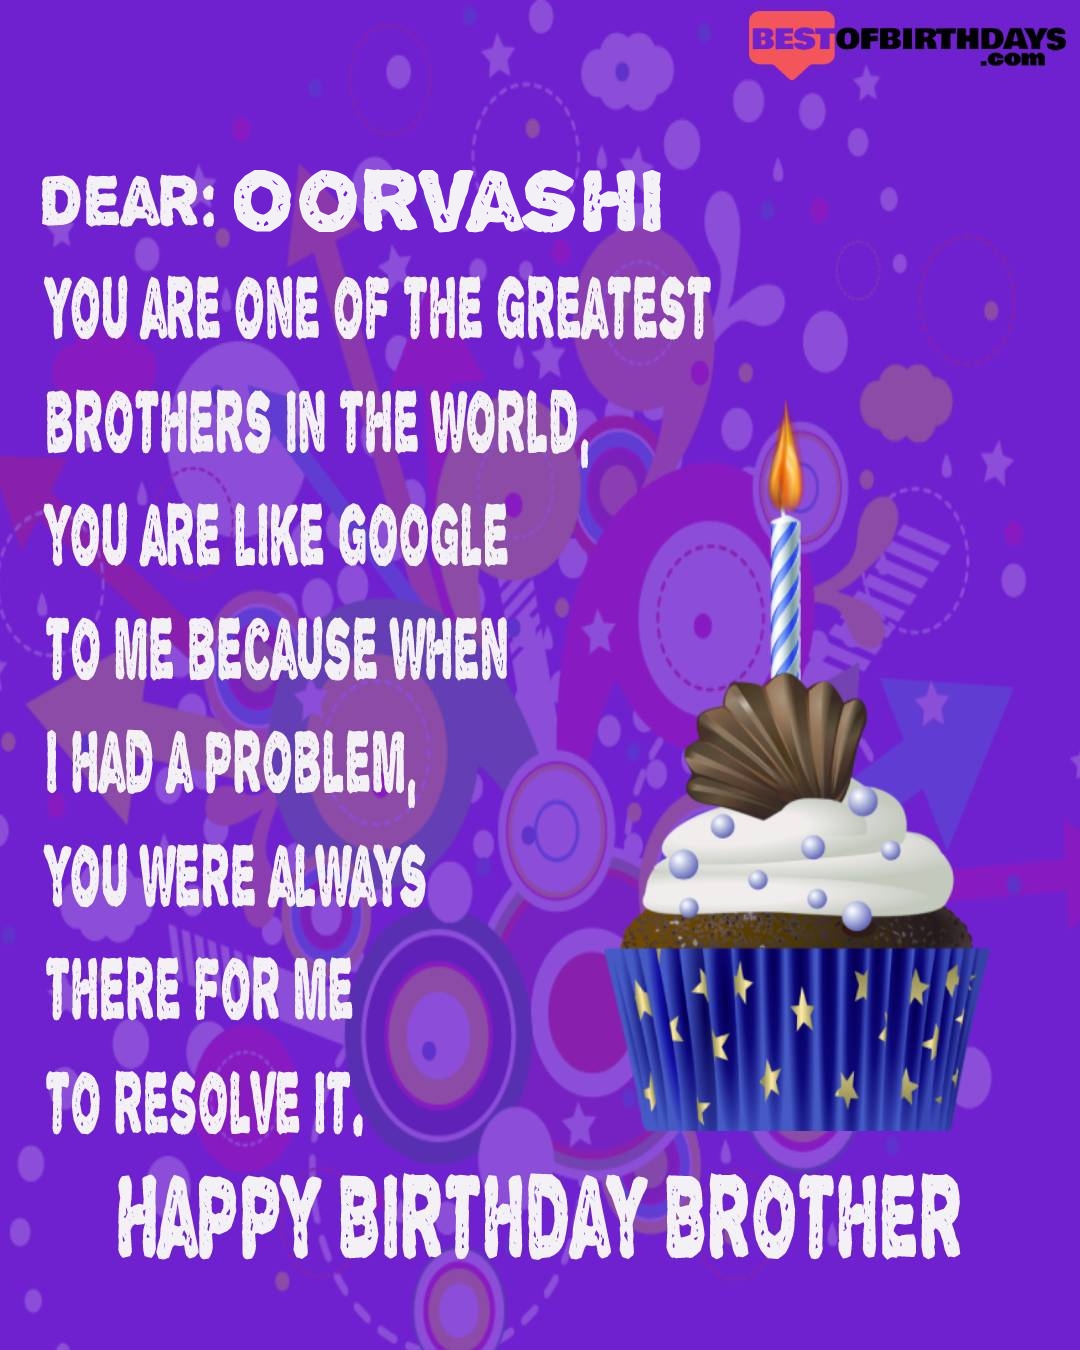 Happy birthday oorvashi bhai brother bro